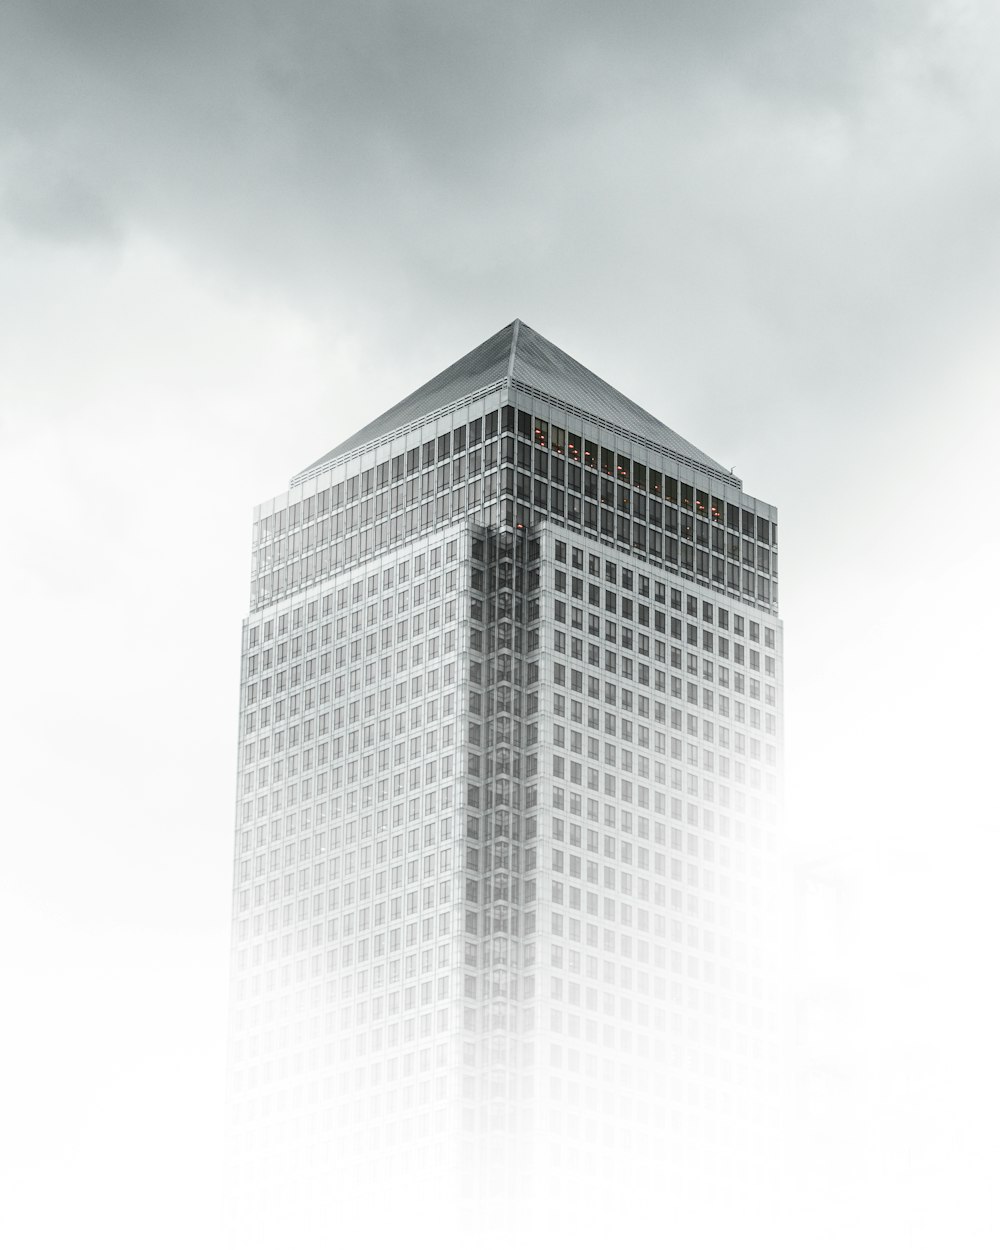 Fotografia Worm's-Eye View de edifício de concreto branco e cinza sob céu nublado